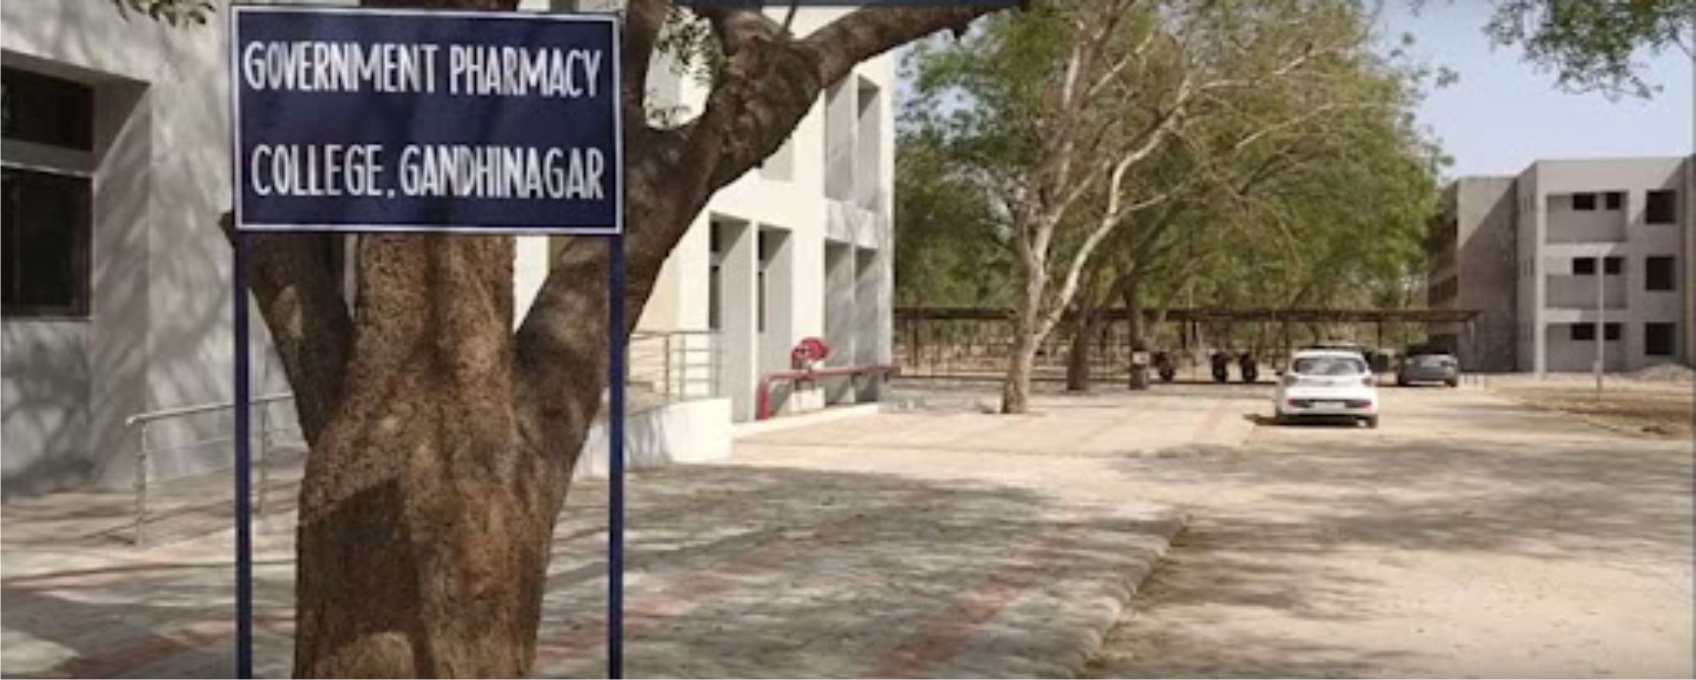 Government Pharmacy College - Gandhinagar